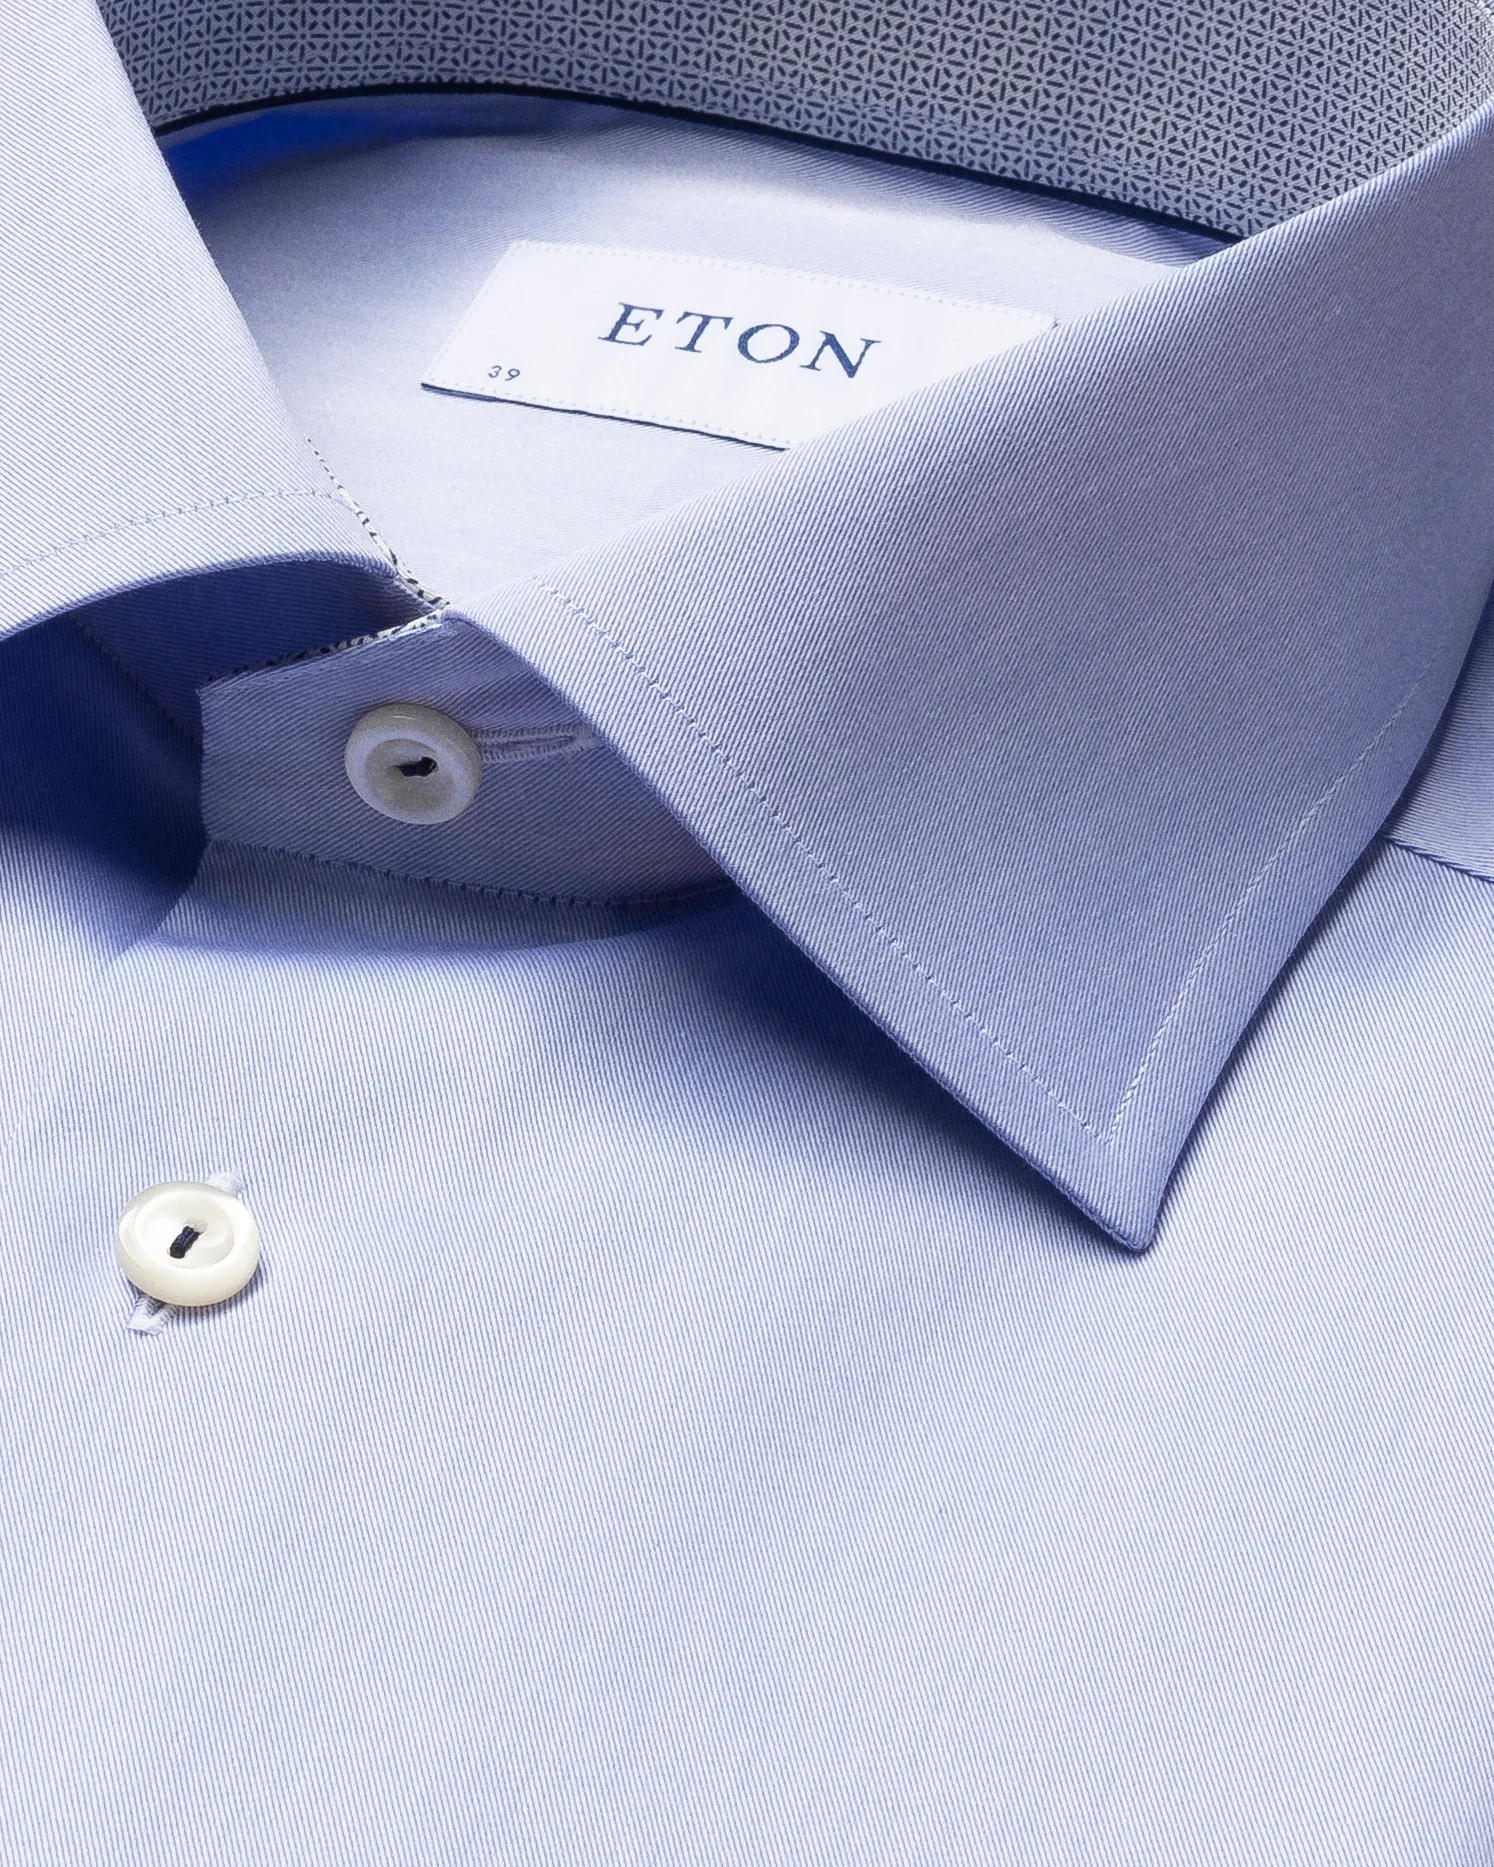 Eton - blue lightweight twill shirt geometric details